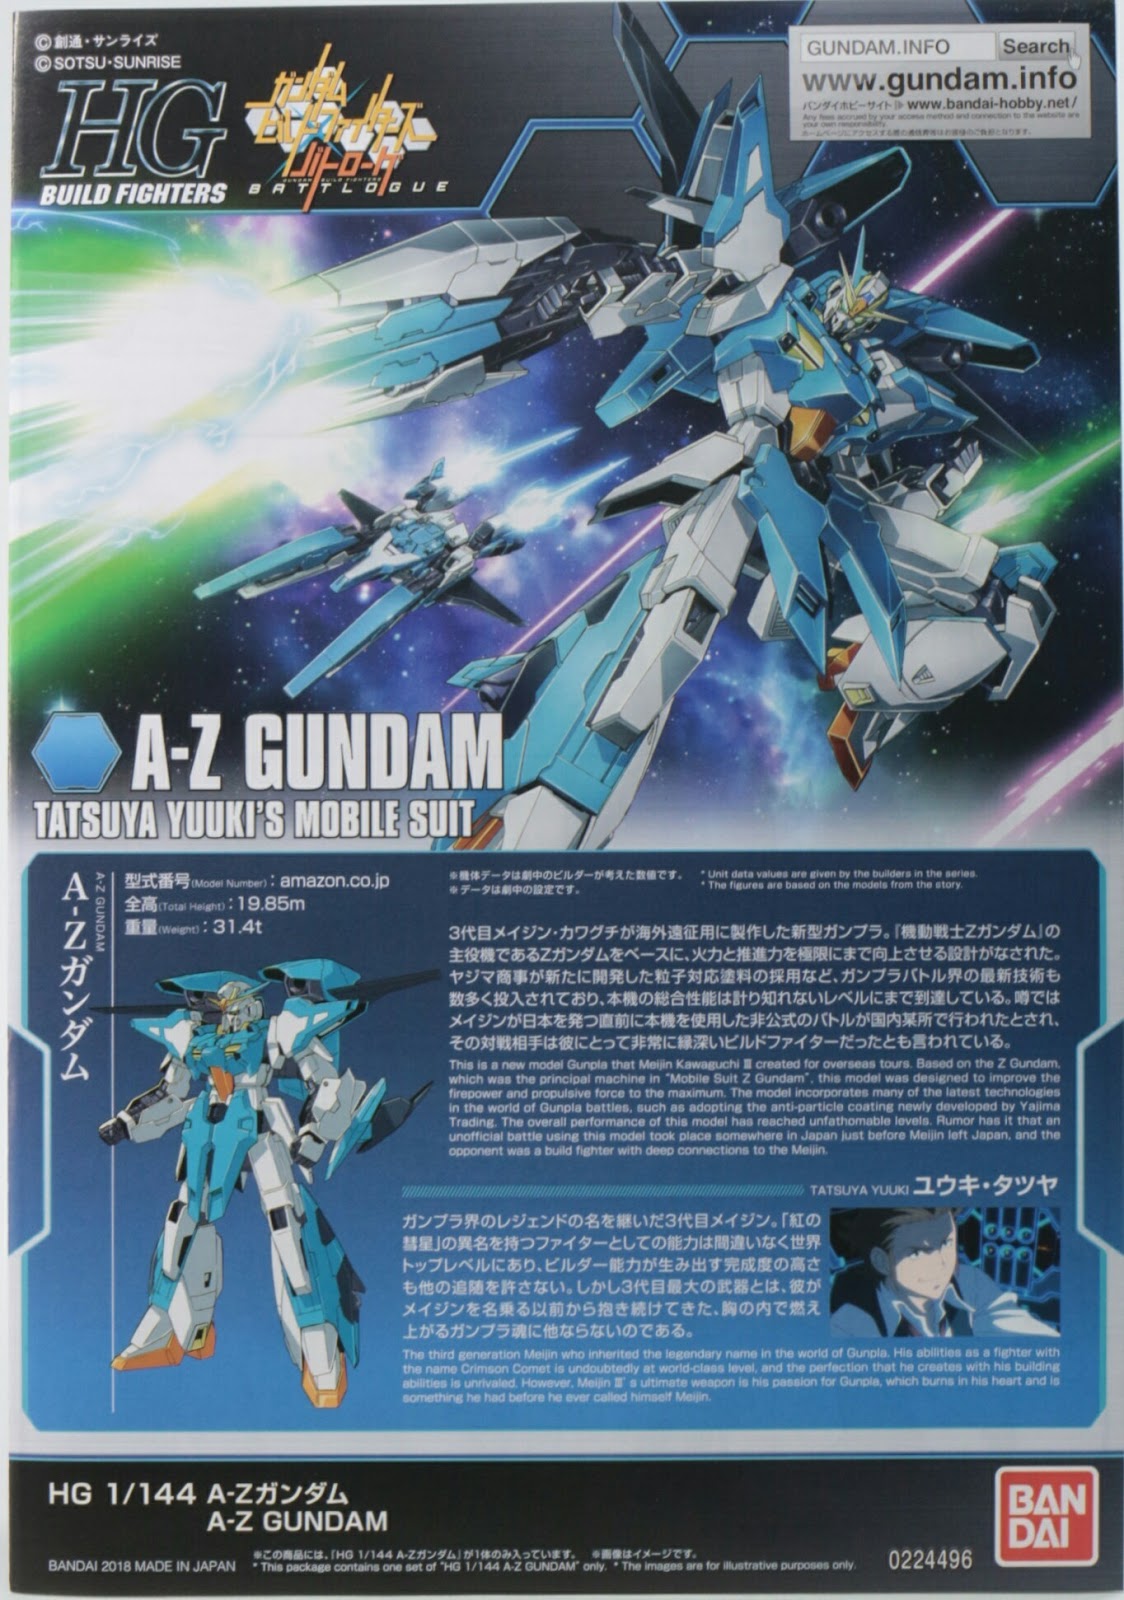 caught the wiki lackin' : r/Gundam